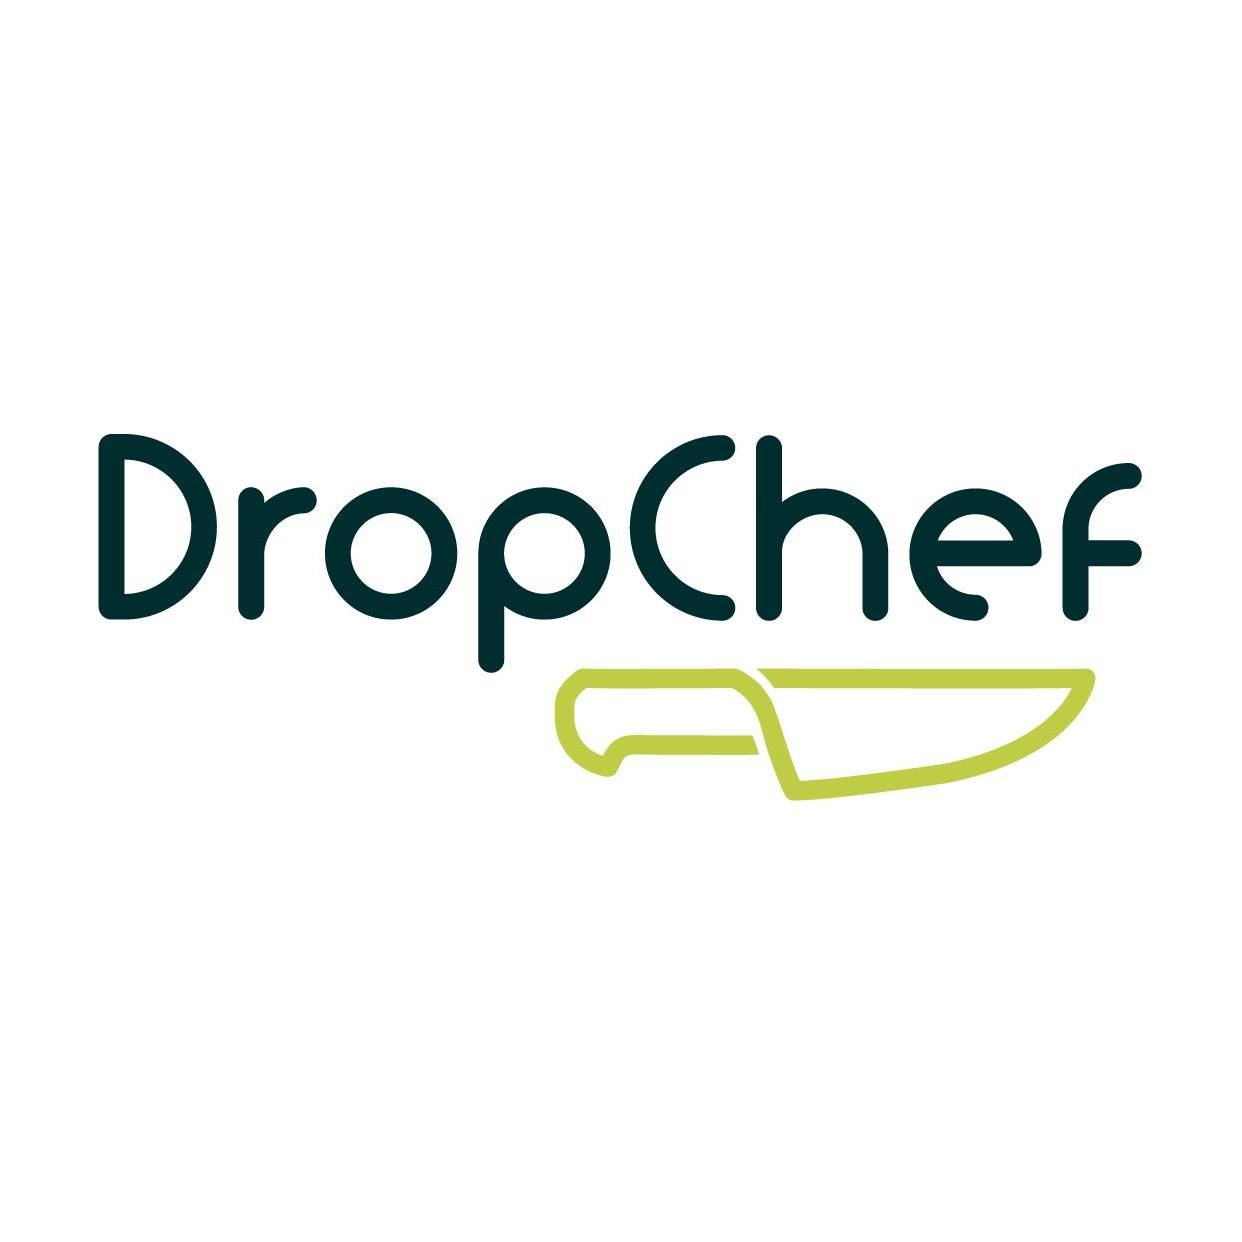 DropChef